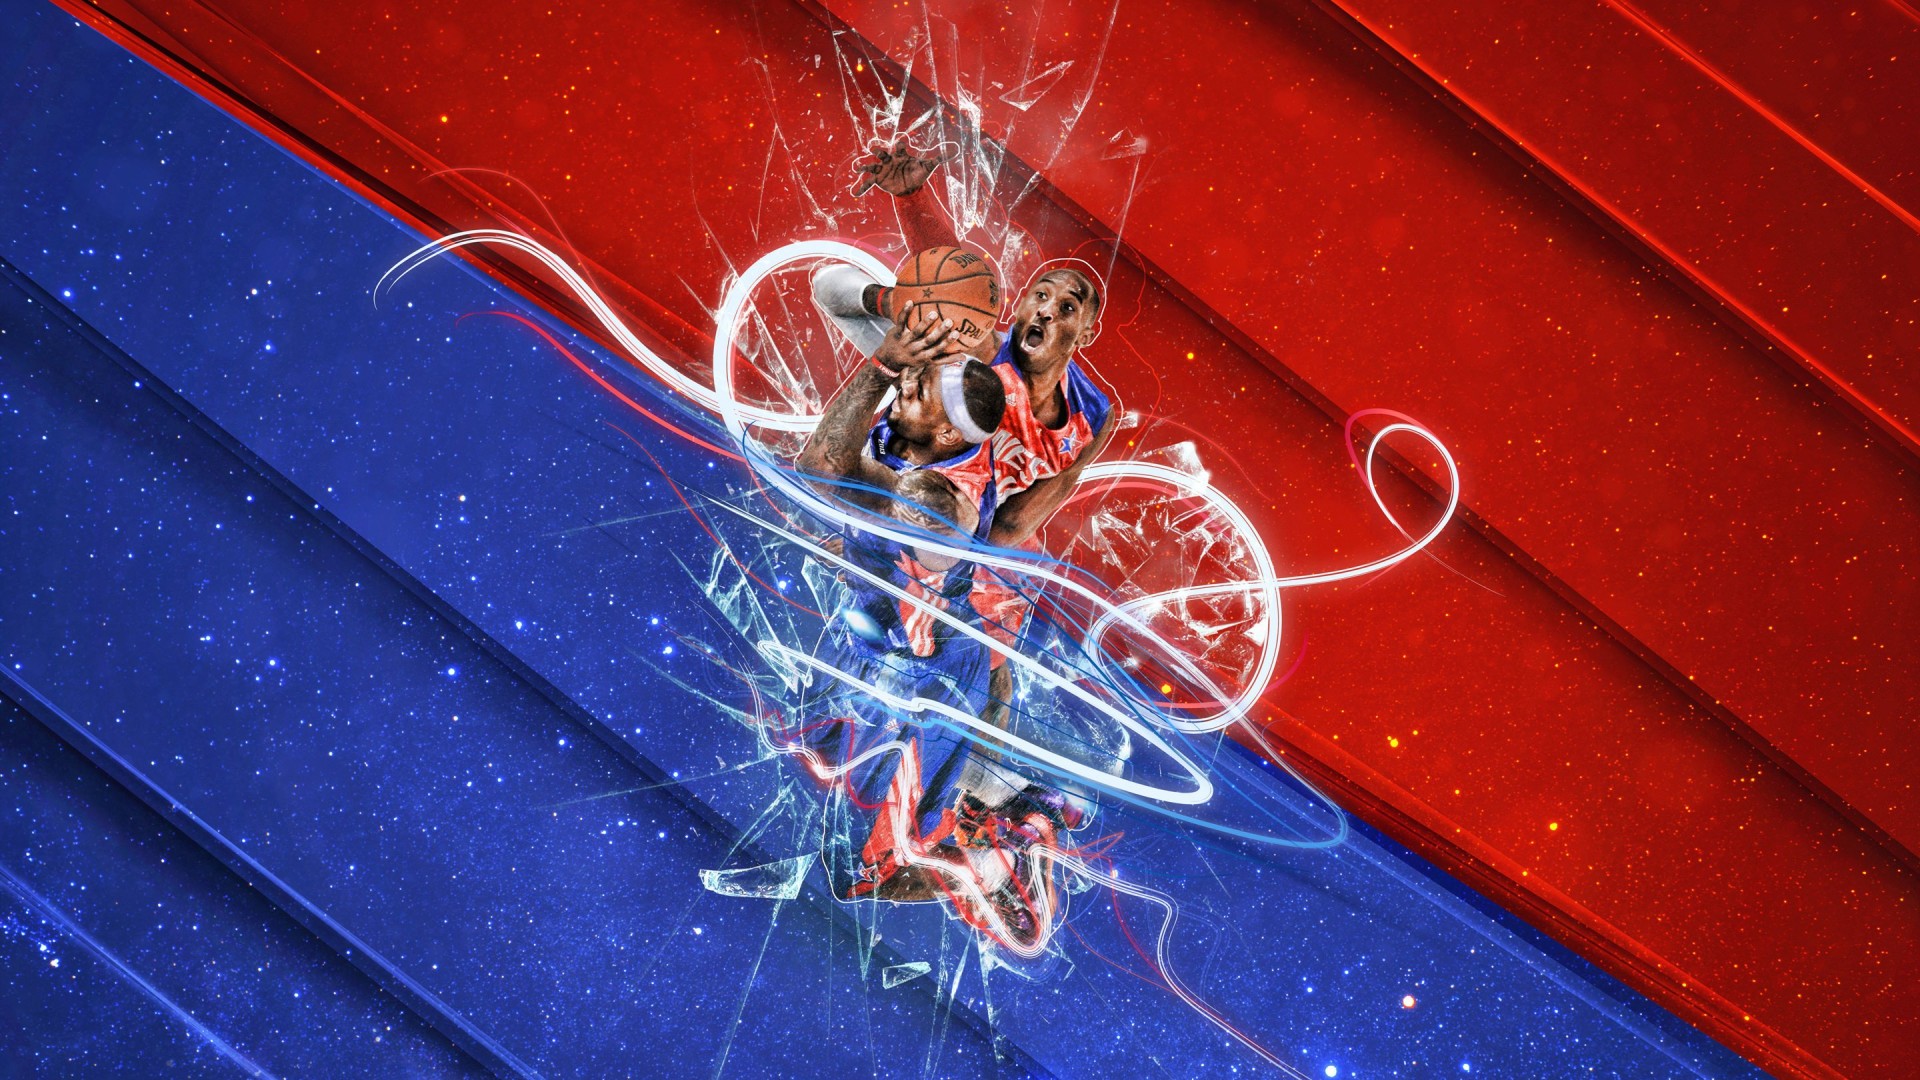 LeBron James Vs Kobe Bryant - NBA - Basketball Wallpaper for Desktop 1920x1080